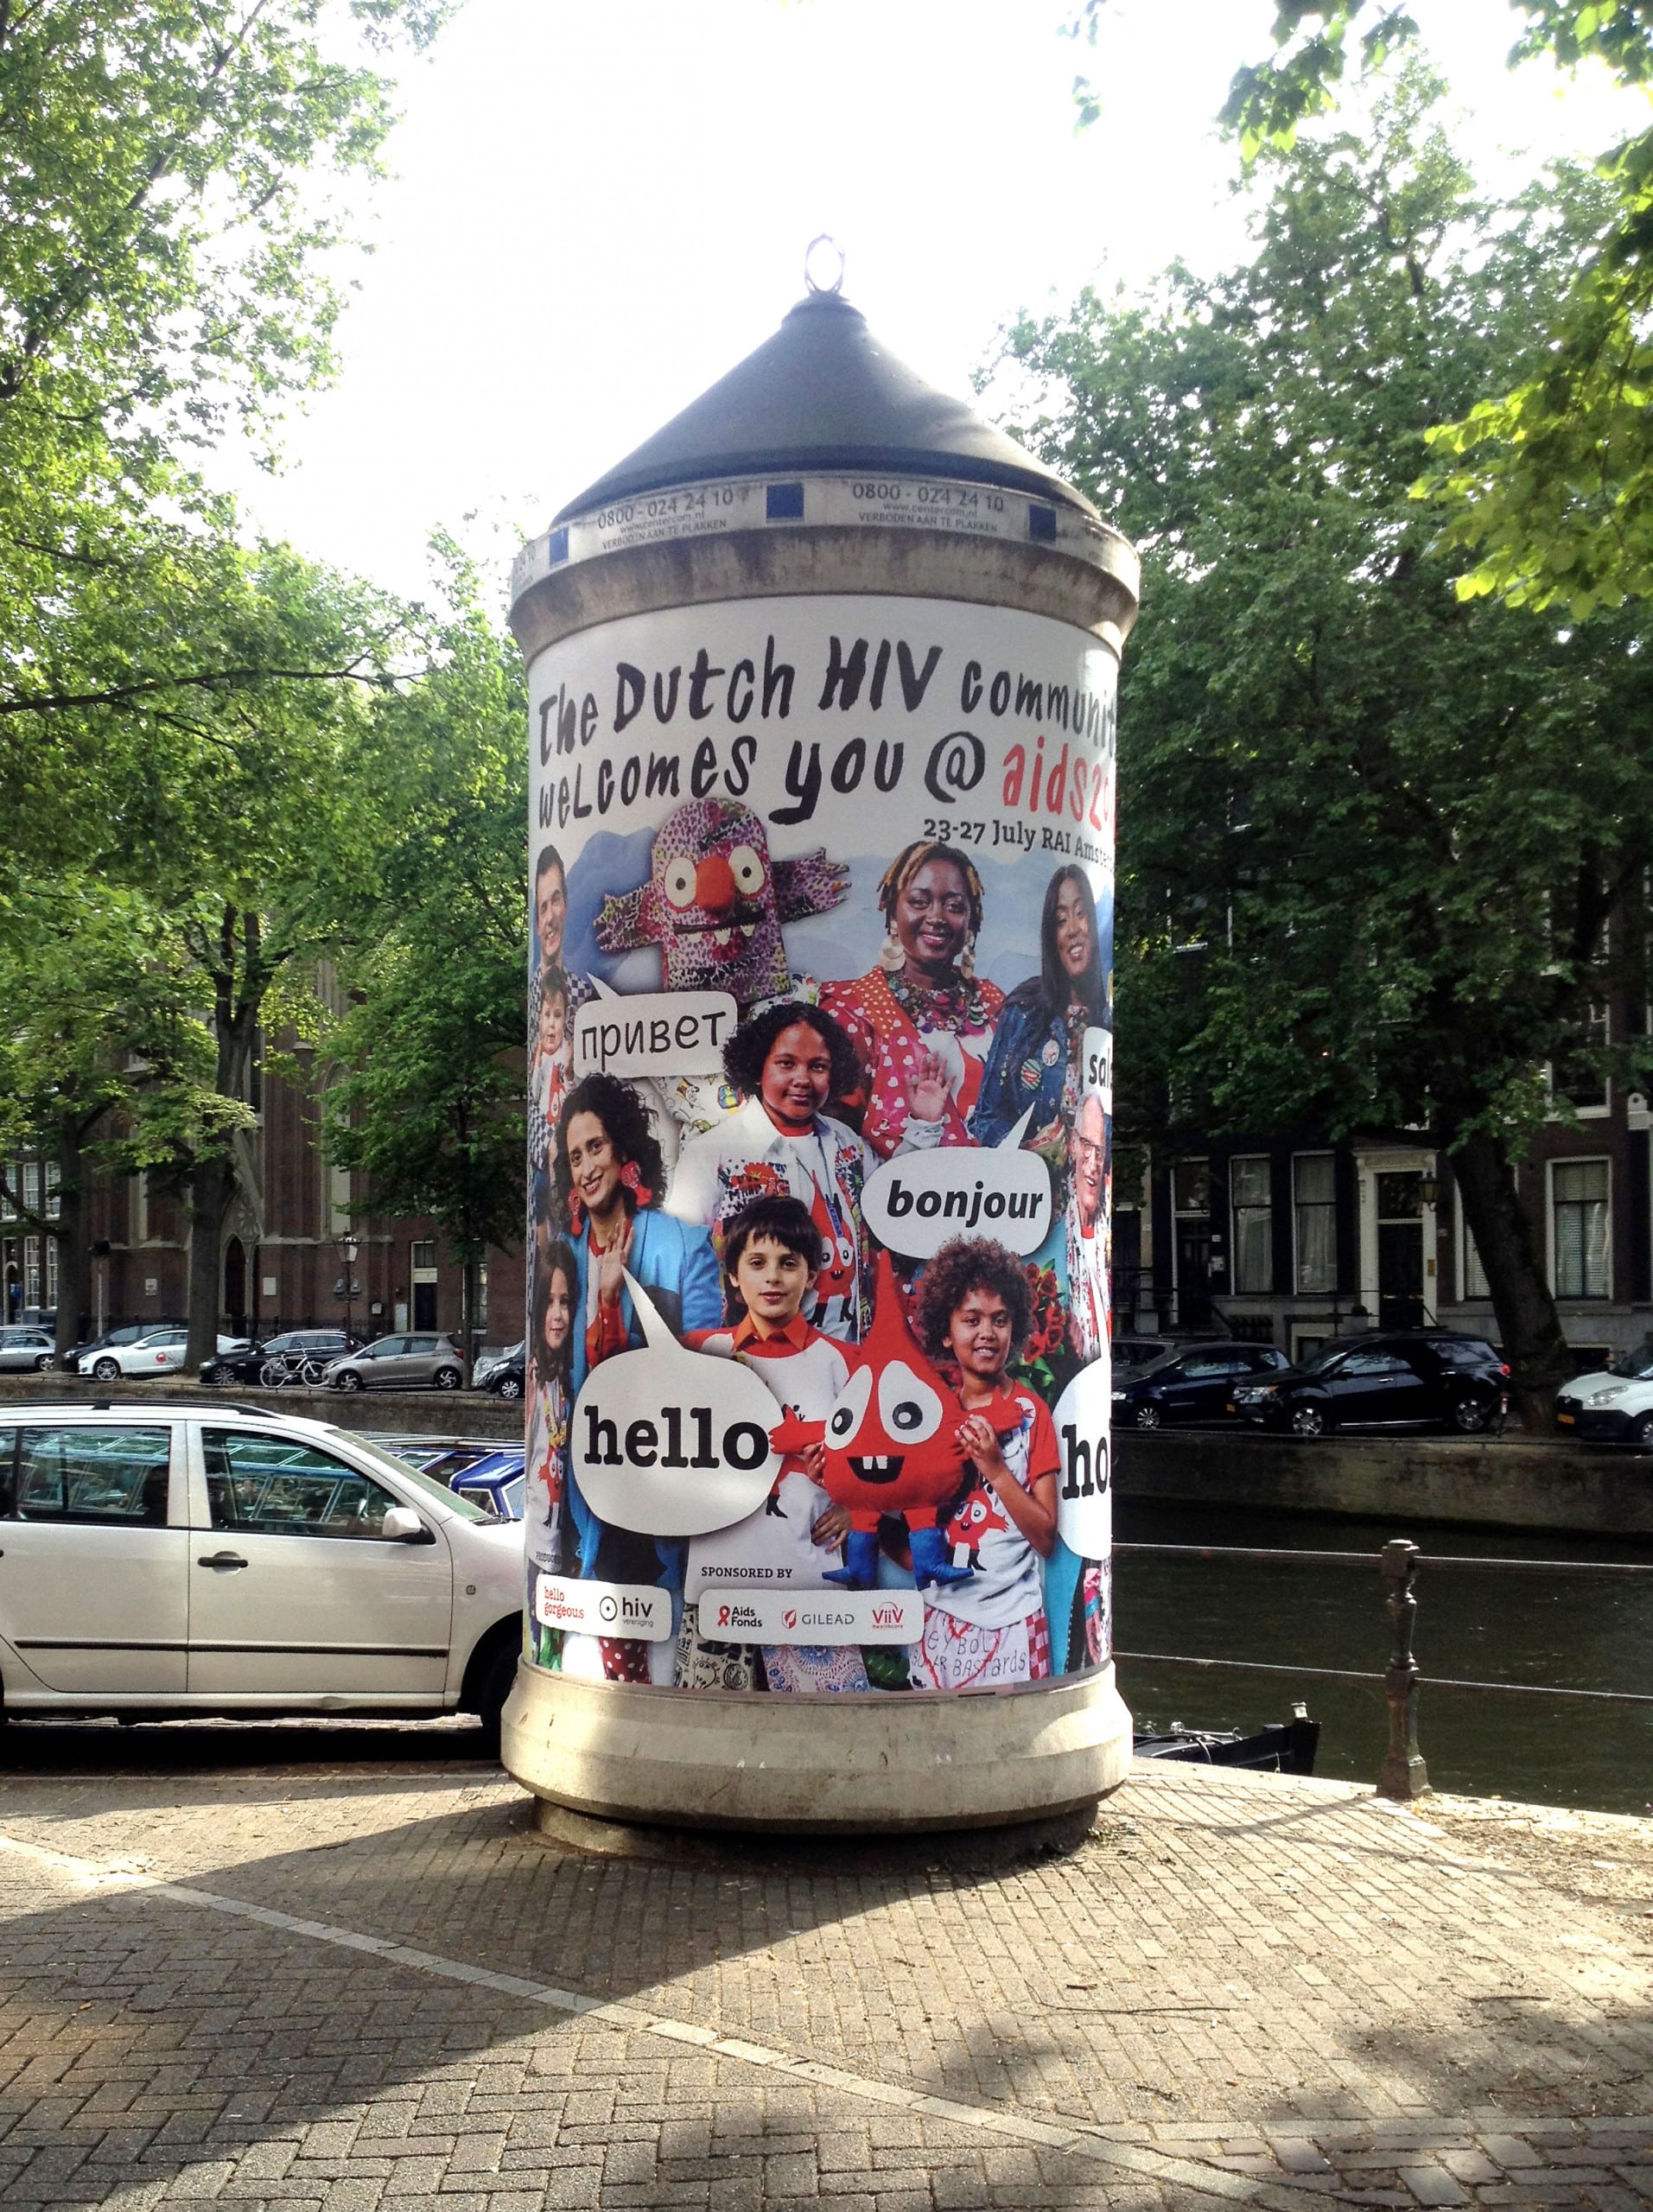 Gebr. Silvestri Positively Dutch – ‘The Dutch HIV Community welcomes you @ Aids 2018’